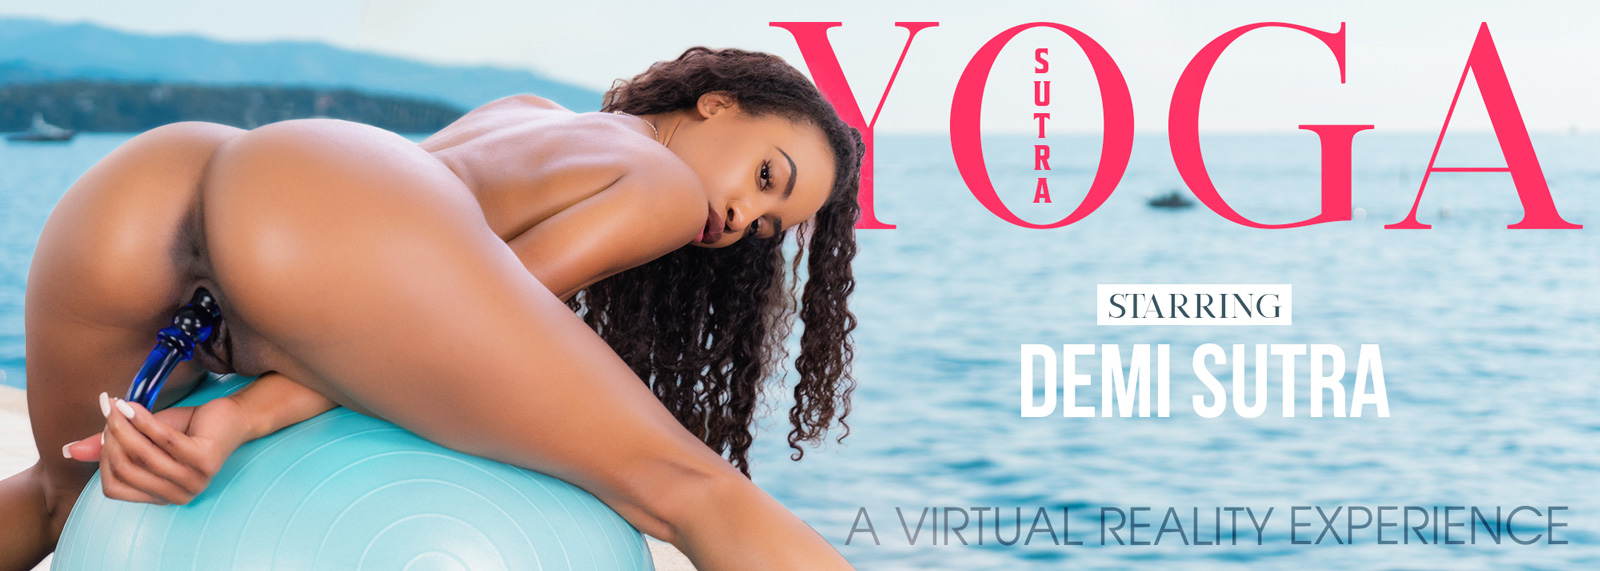 Yoga Sutra - VR Porn Video, Starring: Demi Sutra